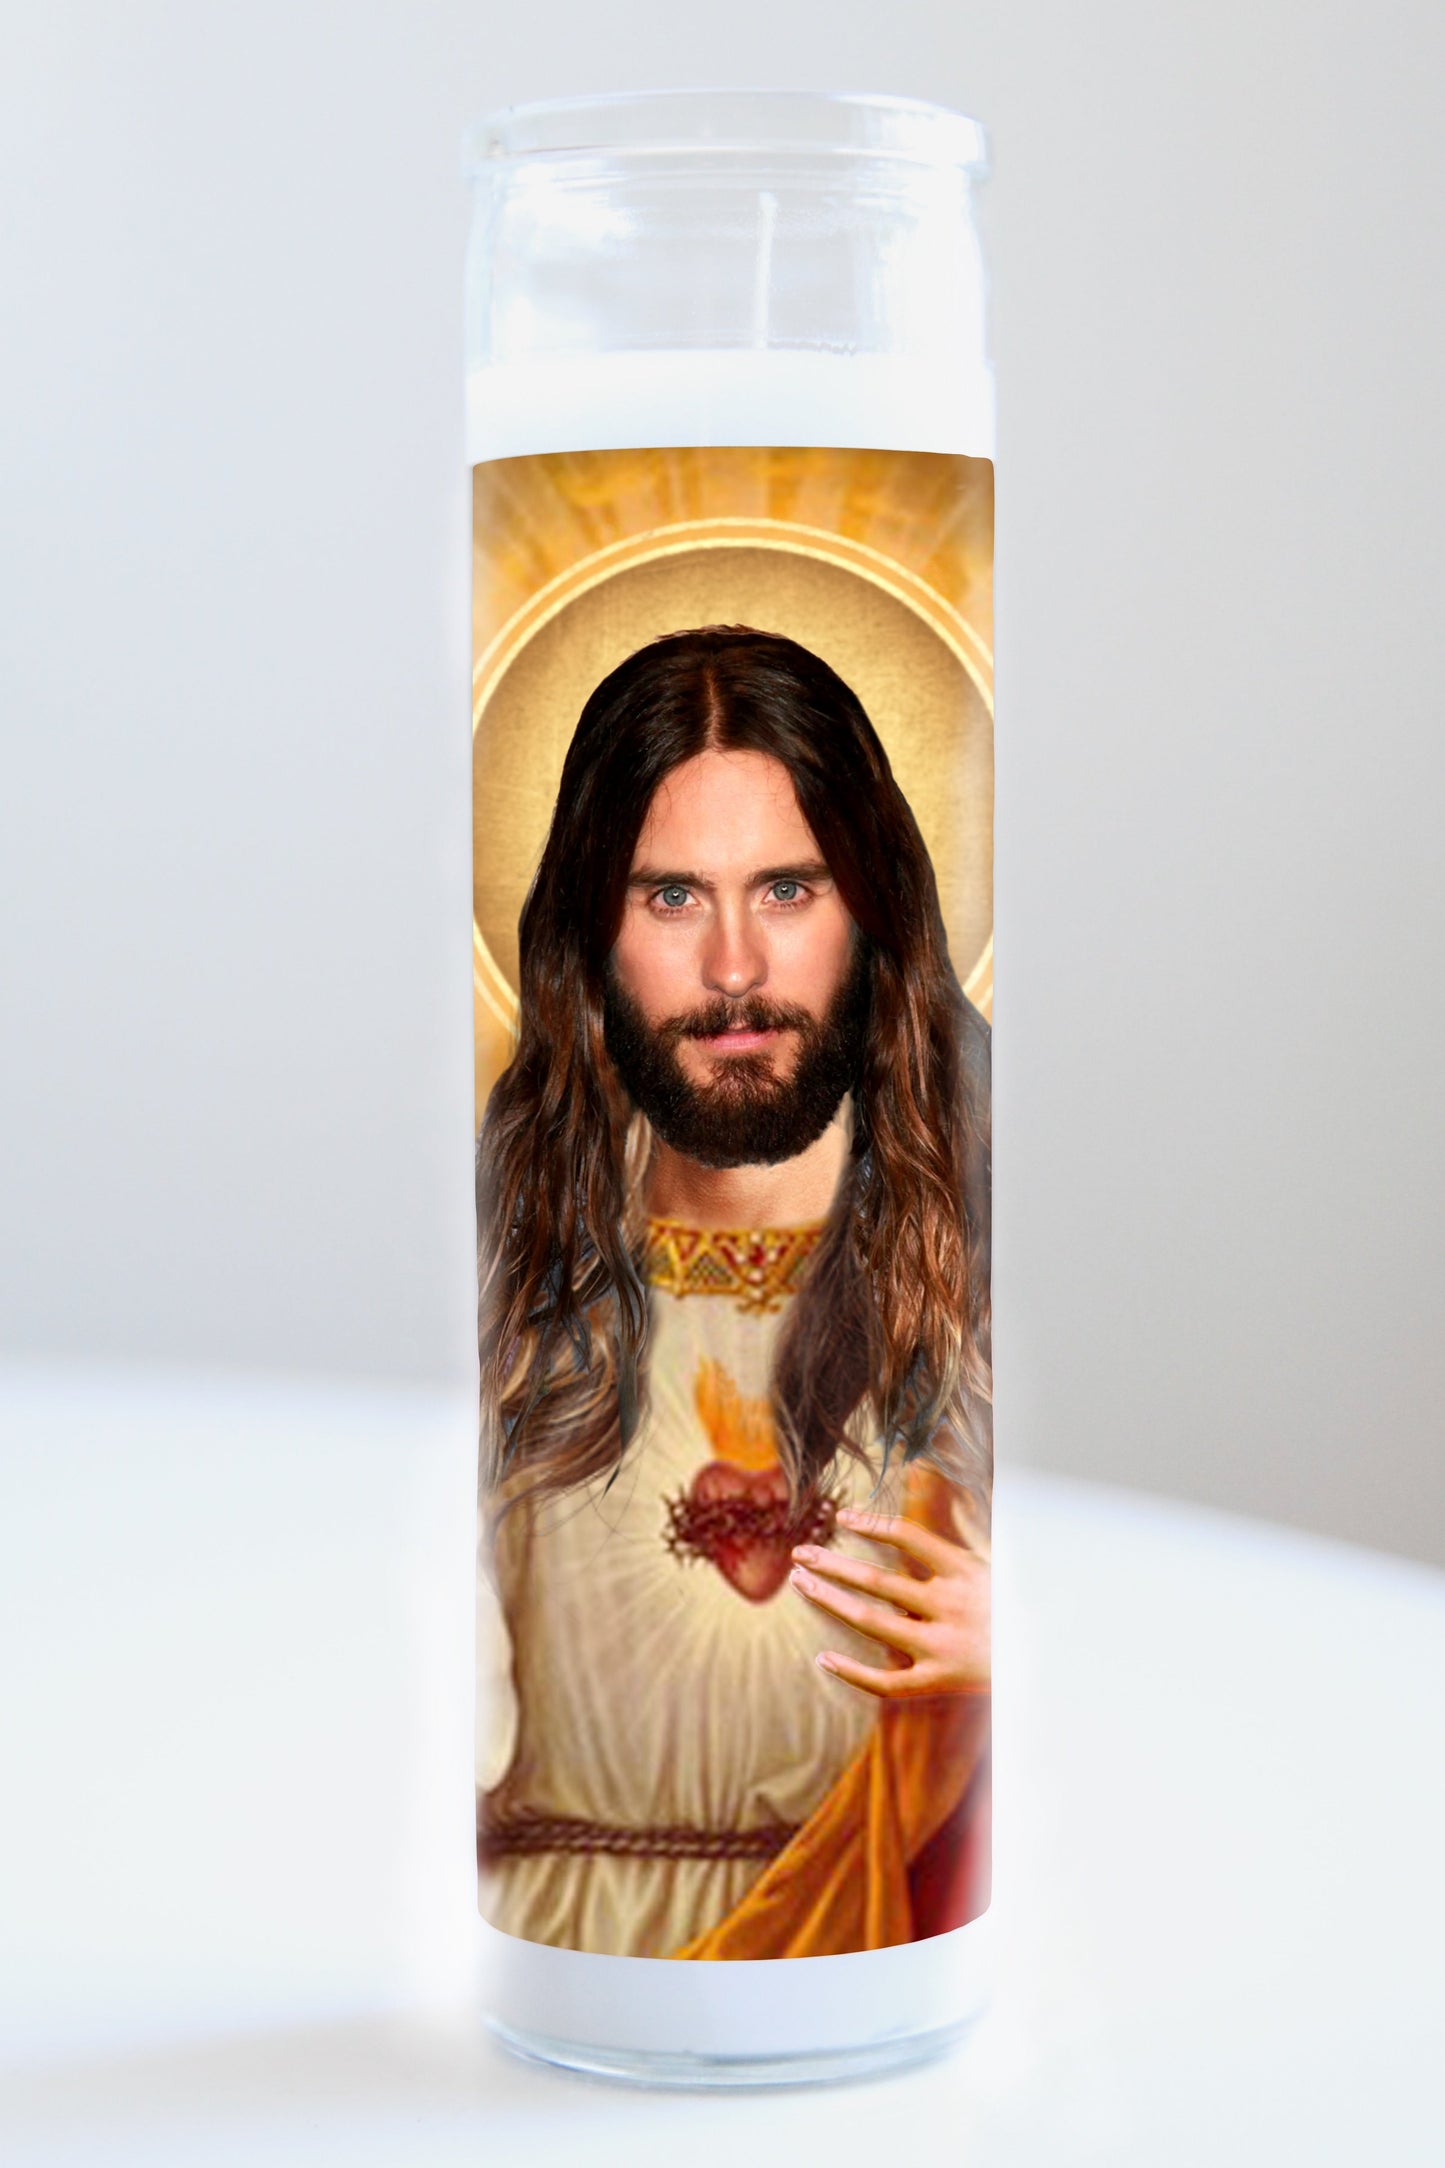 Jared Leto "Long Hair" Saint Candle